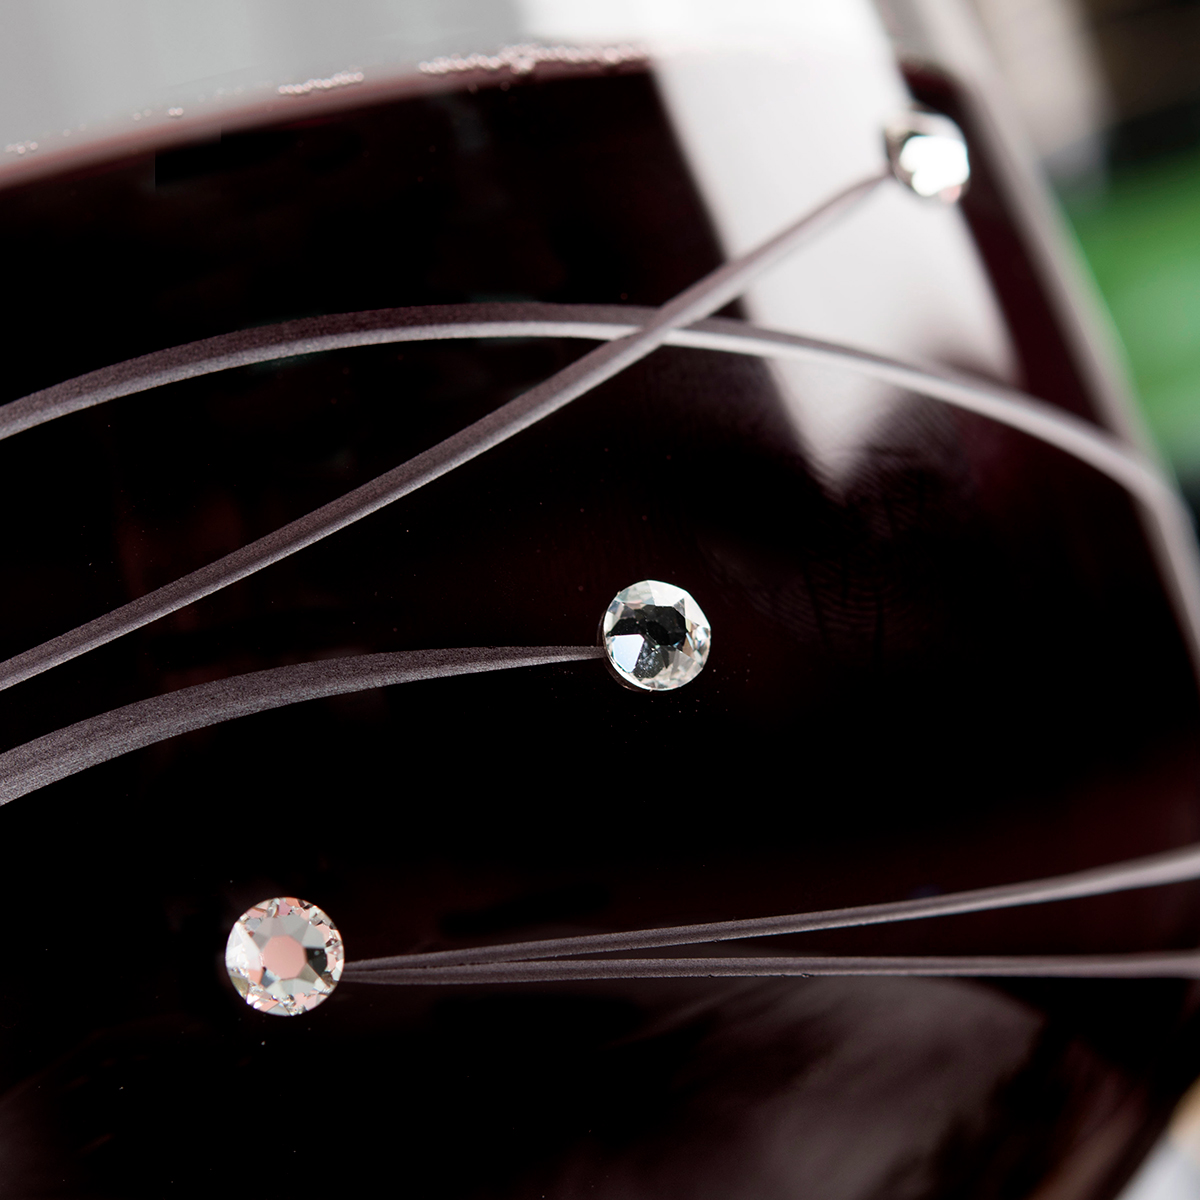 Engraved Swarovski Diamante Wine Glass - For Your Bridesmaid